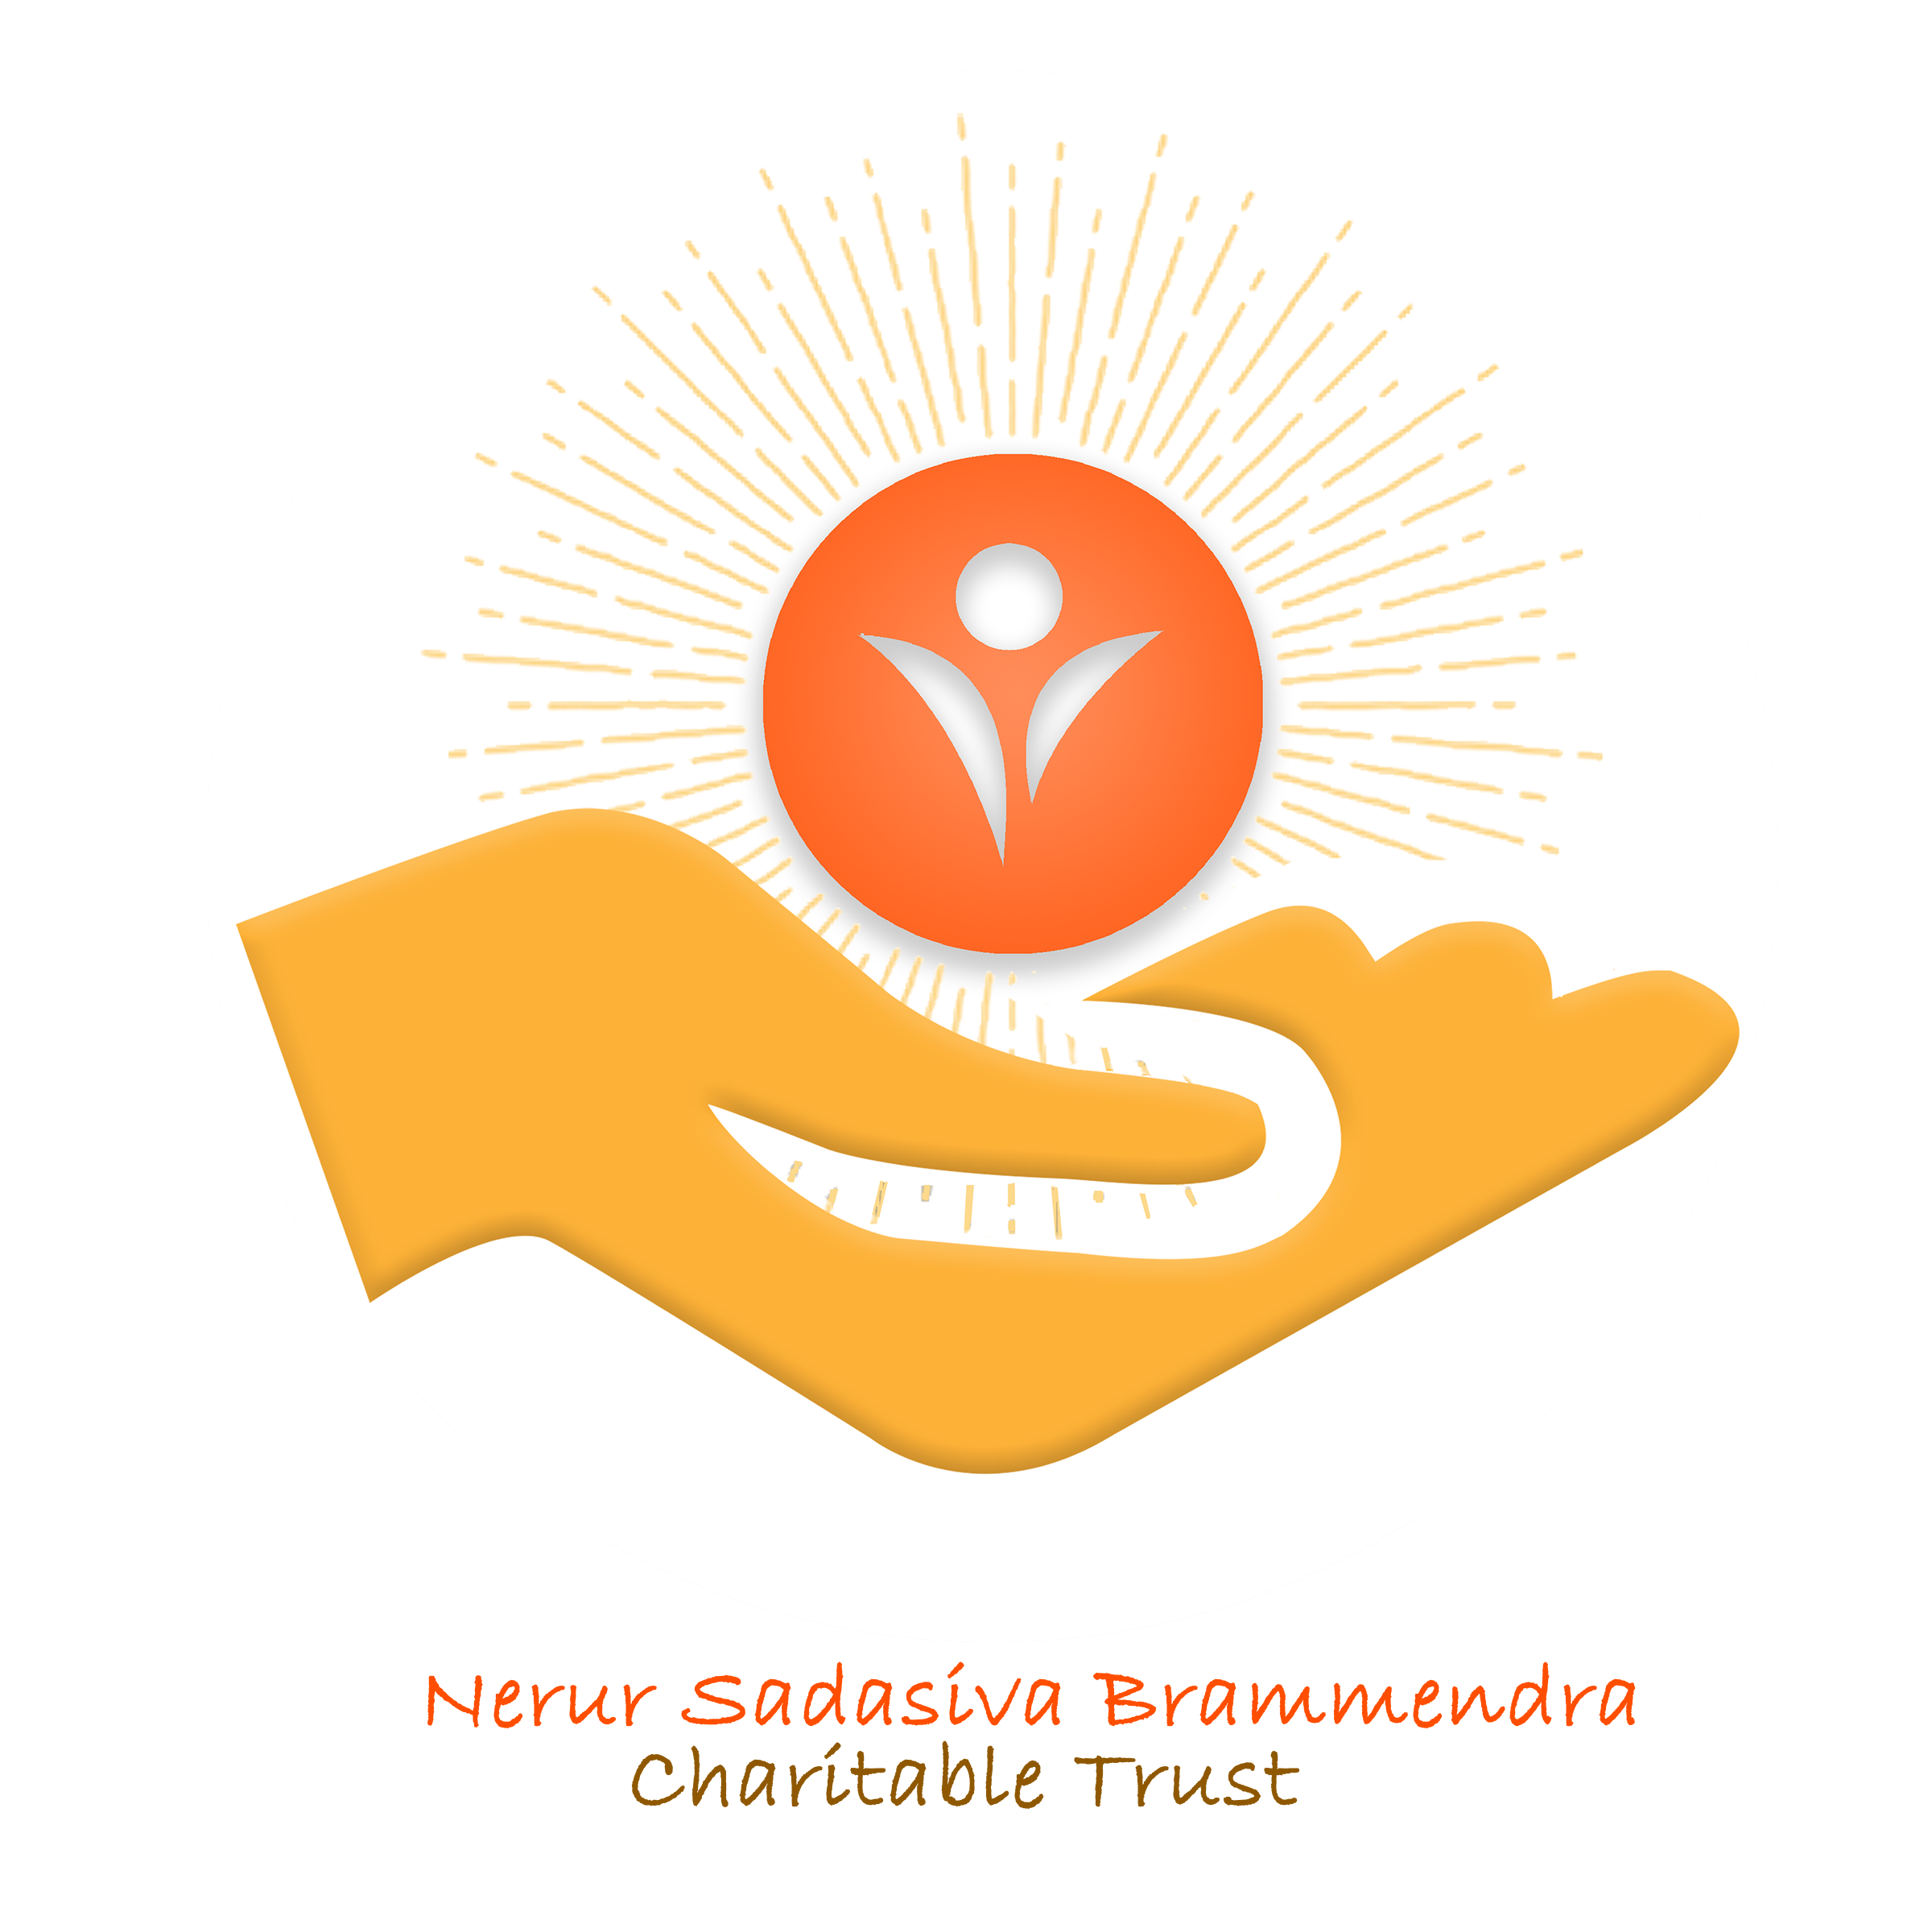 Nerur Sadasiva Brammendra Charitable Trust logo